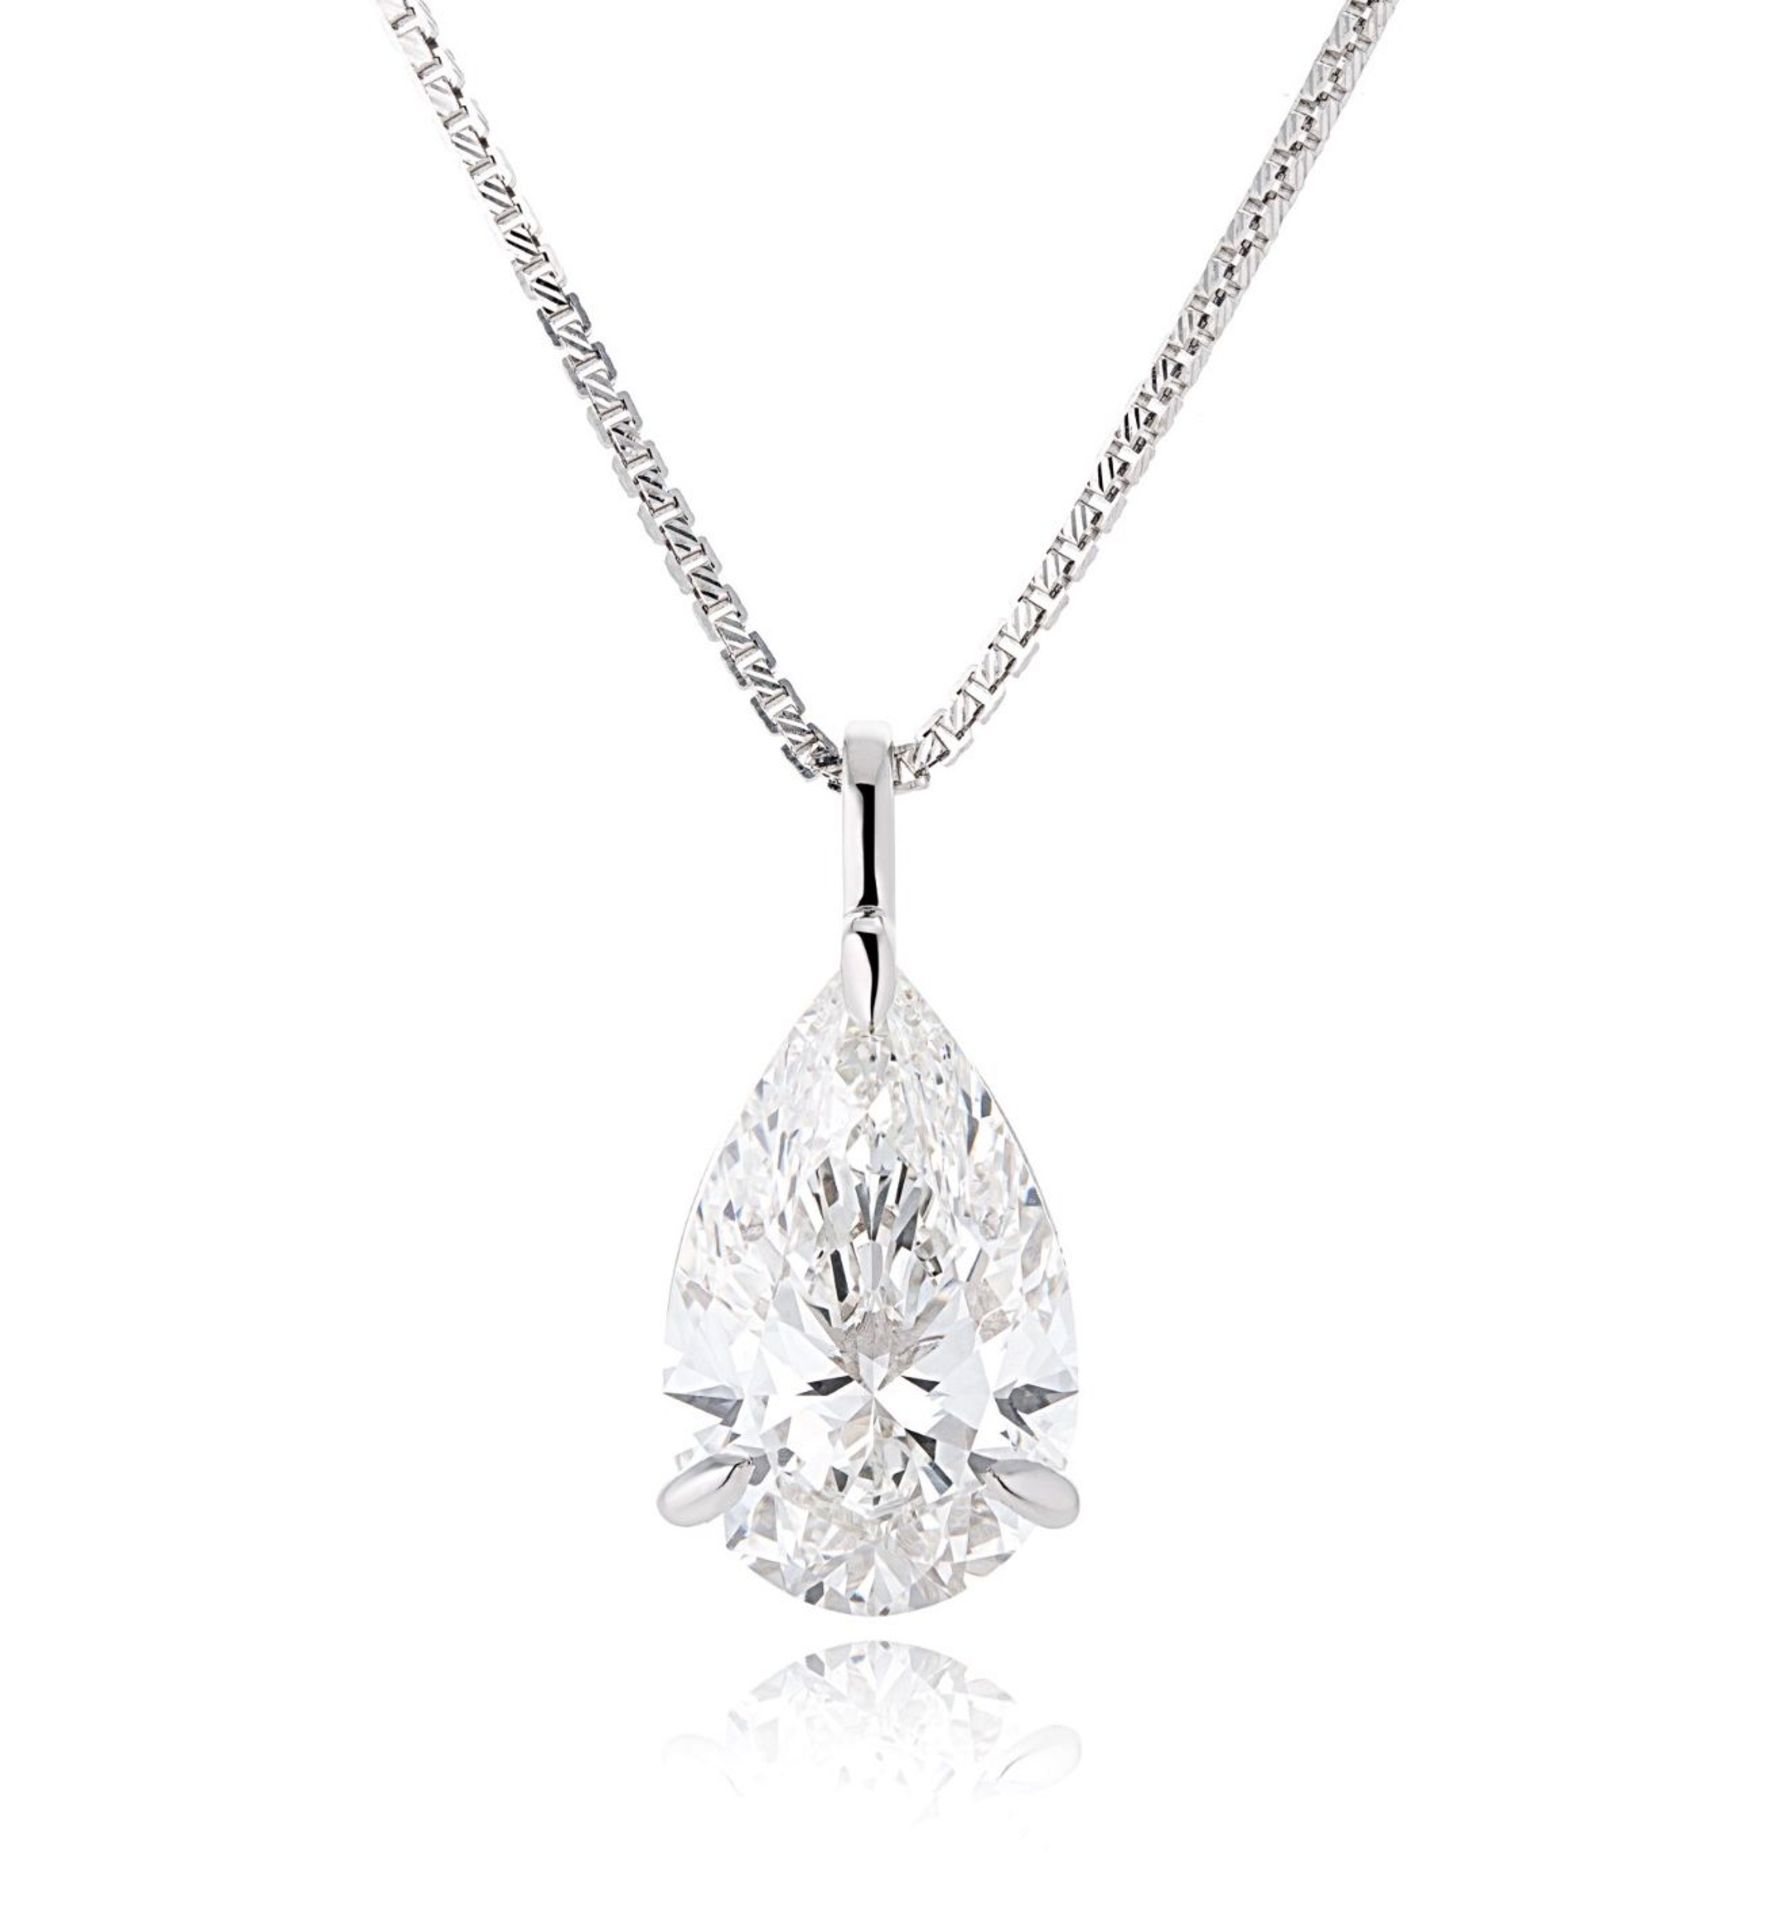 ** ON SALE ** Pear Brilliant Cut 4.13 Carat Diamond Necklace G Colour VS1 Clarity